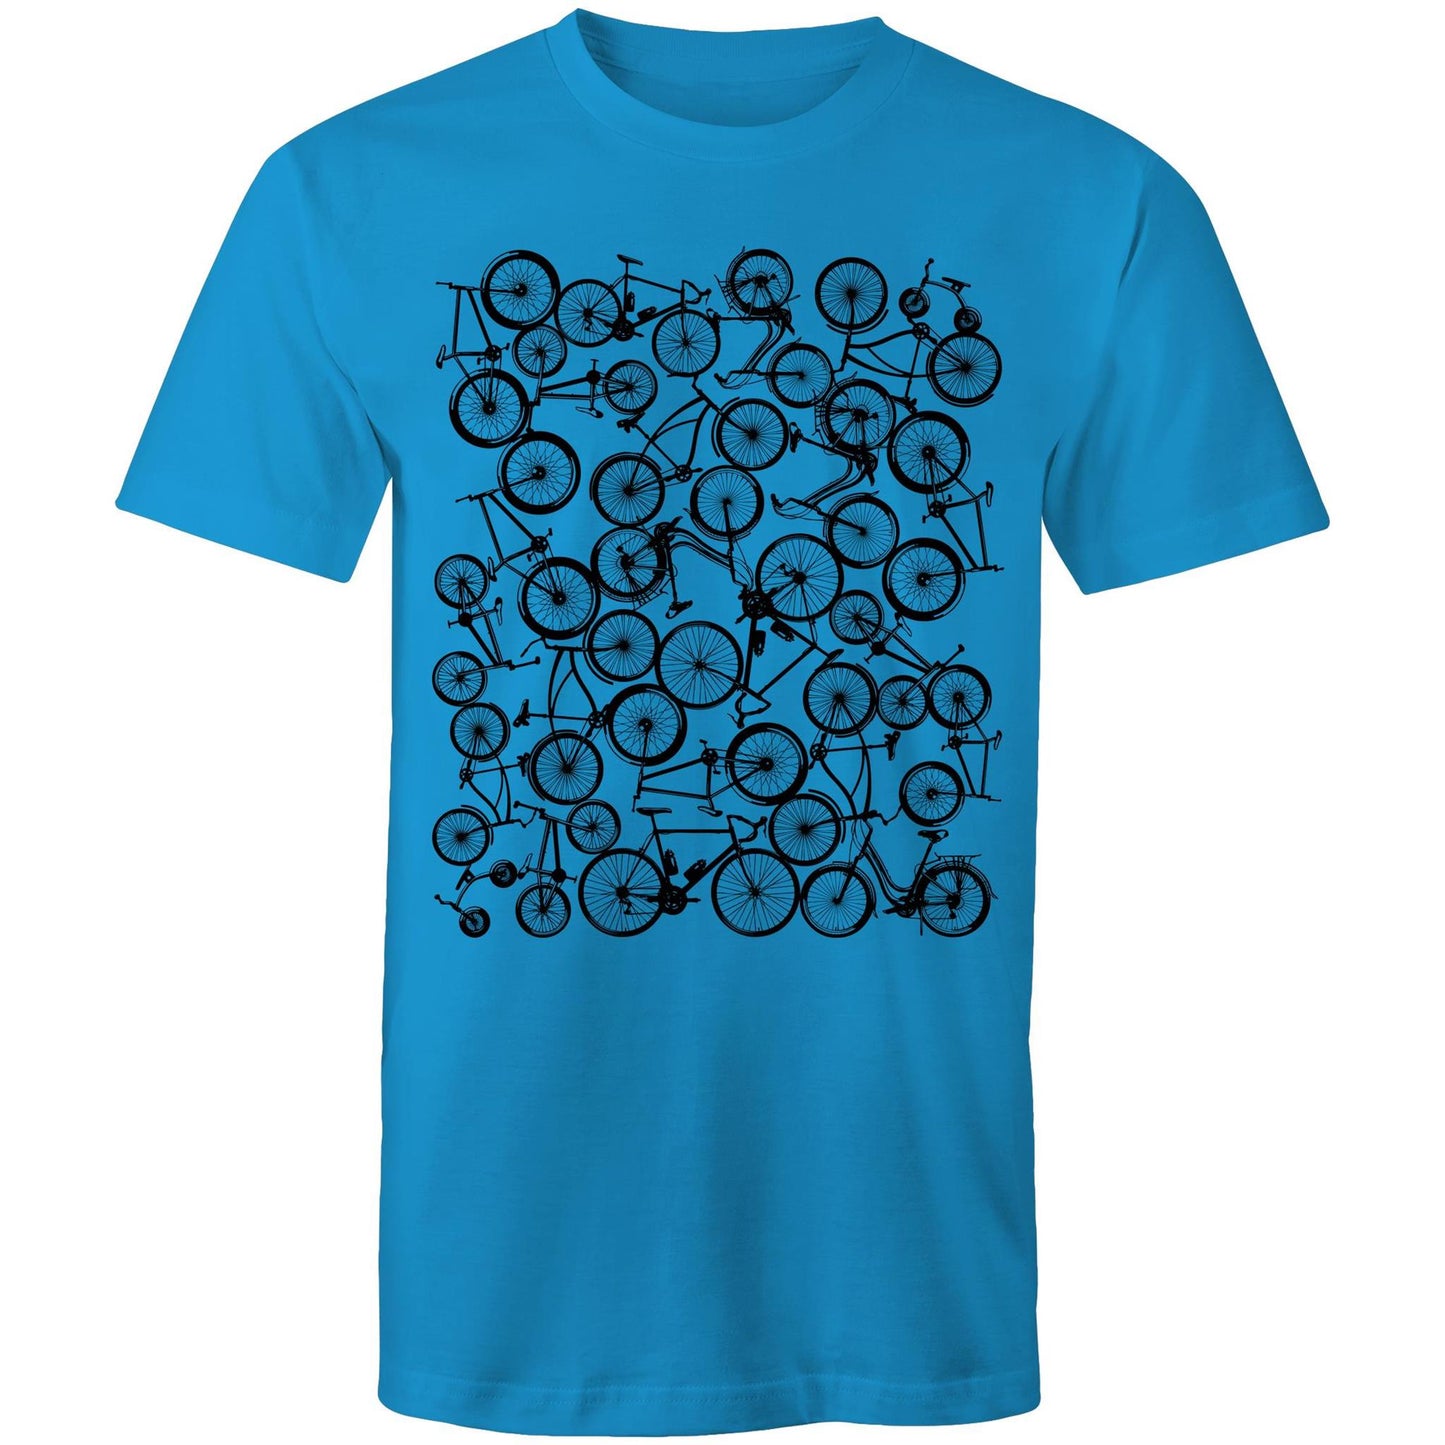 Pile of Bicycles - Men's T-Shirt